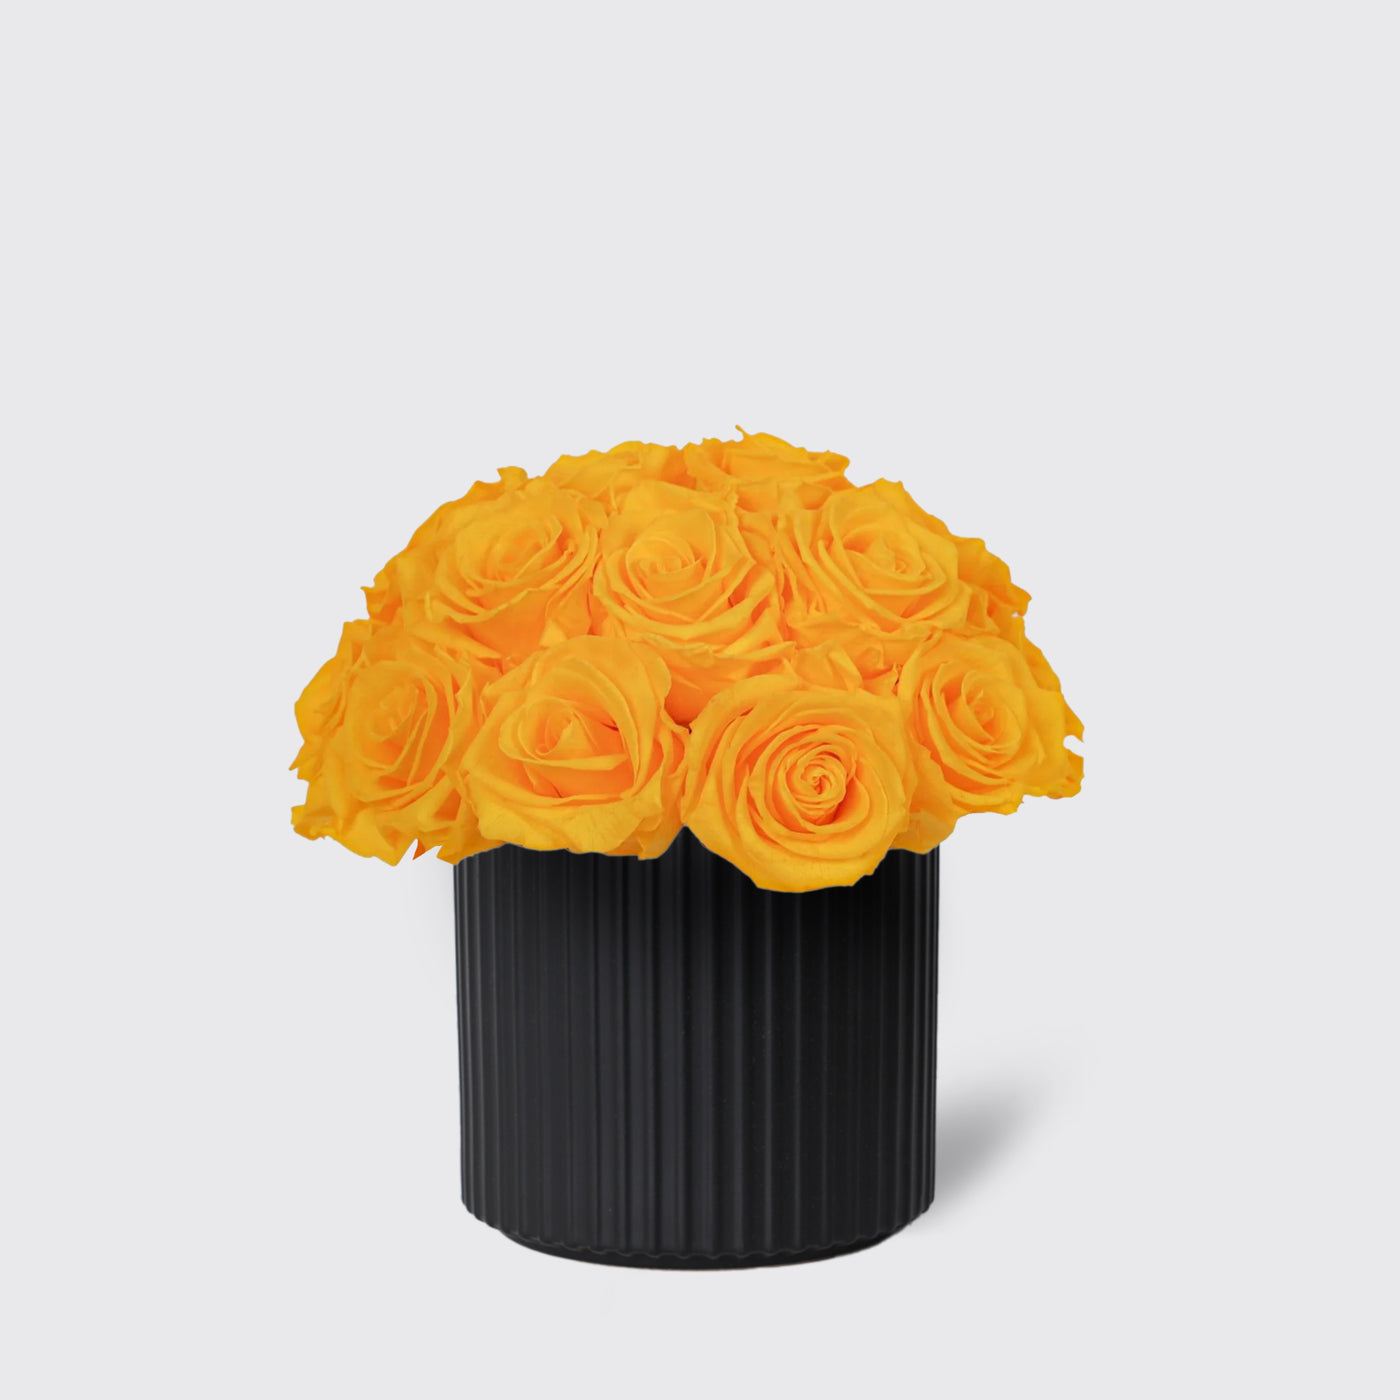 Infinity Sunny Yellow in Vase - Infinity Roses